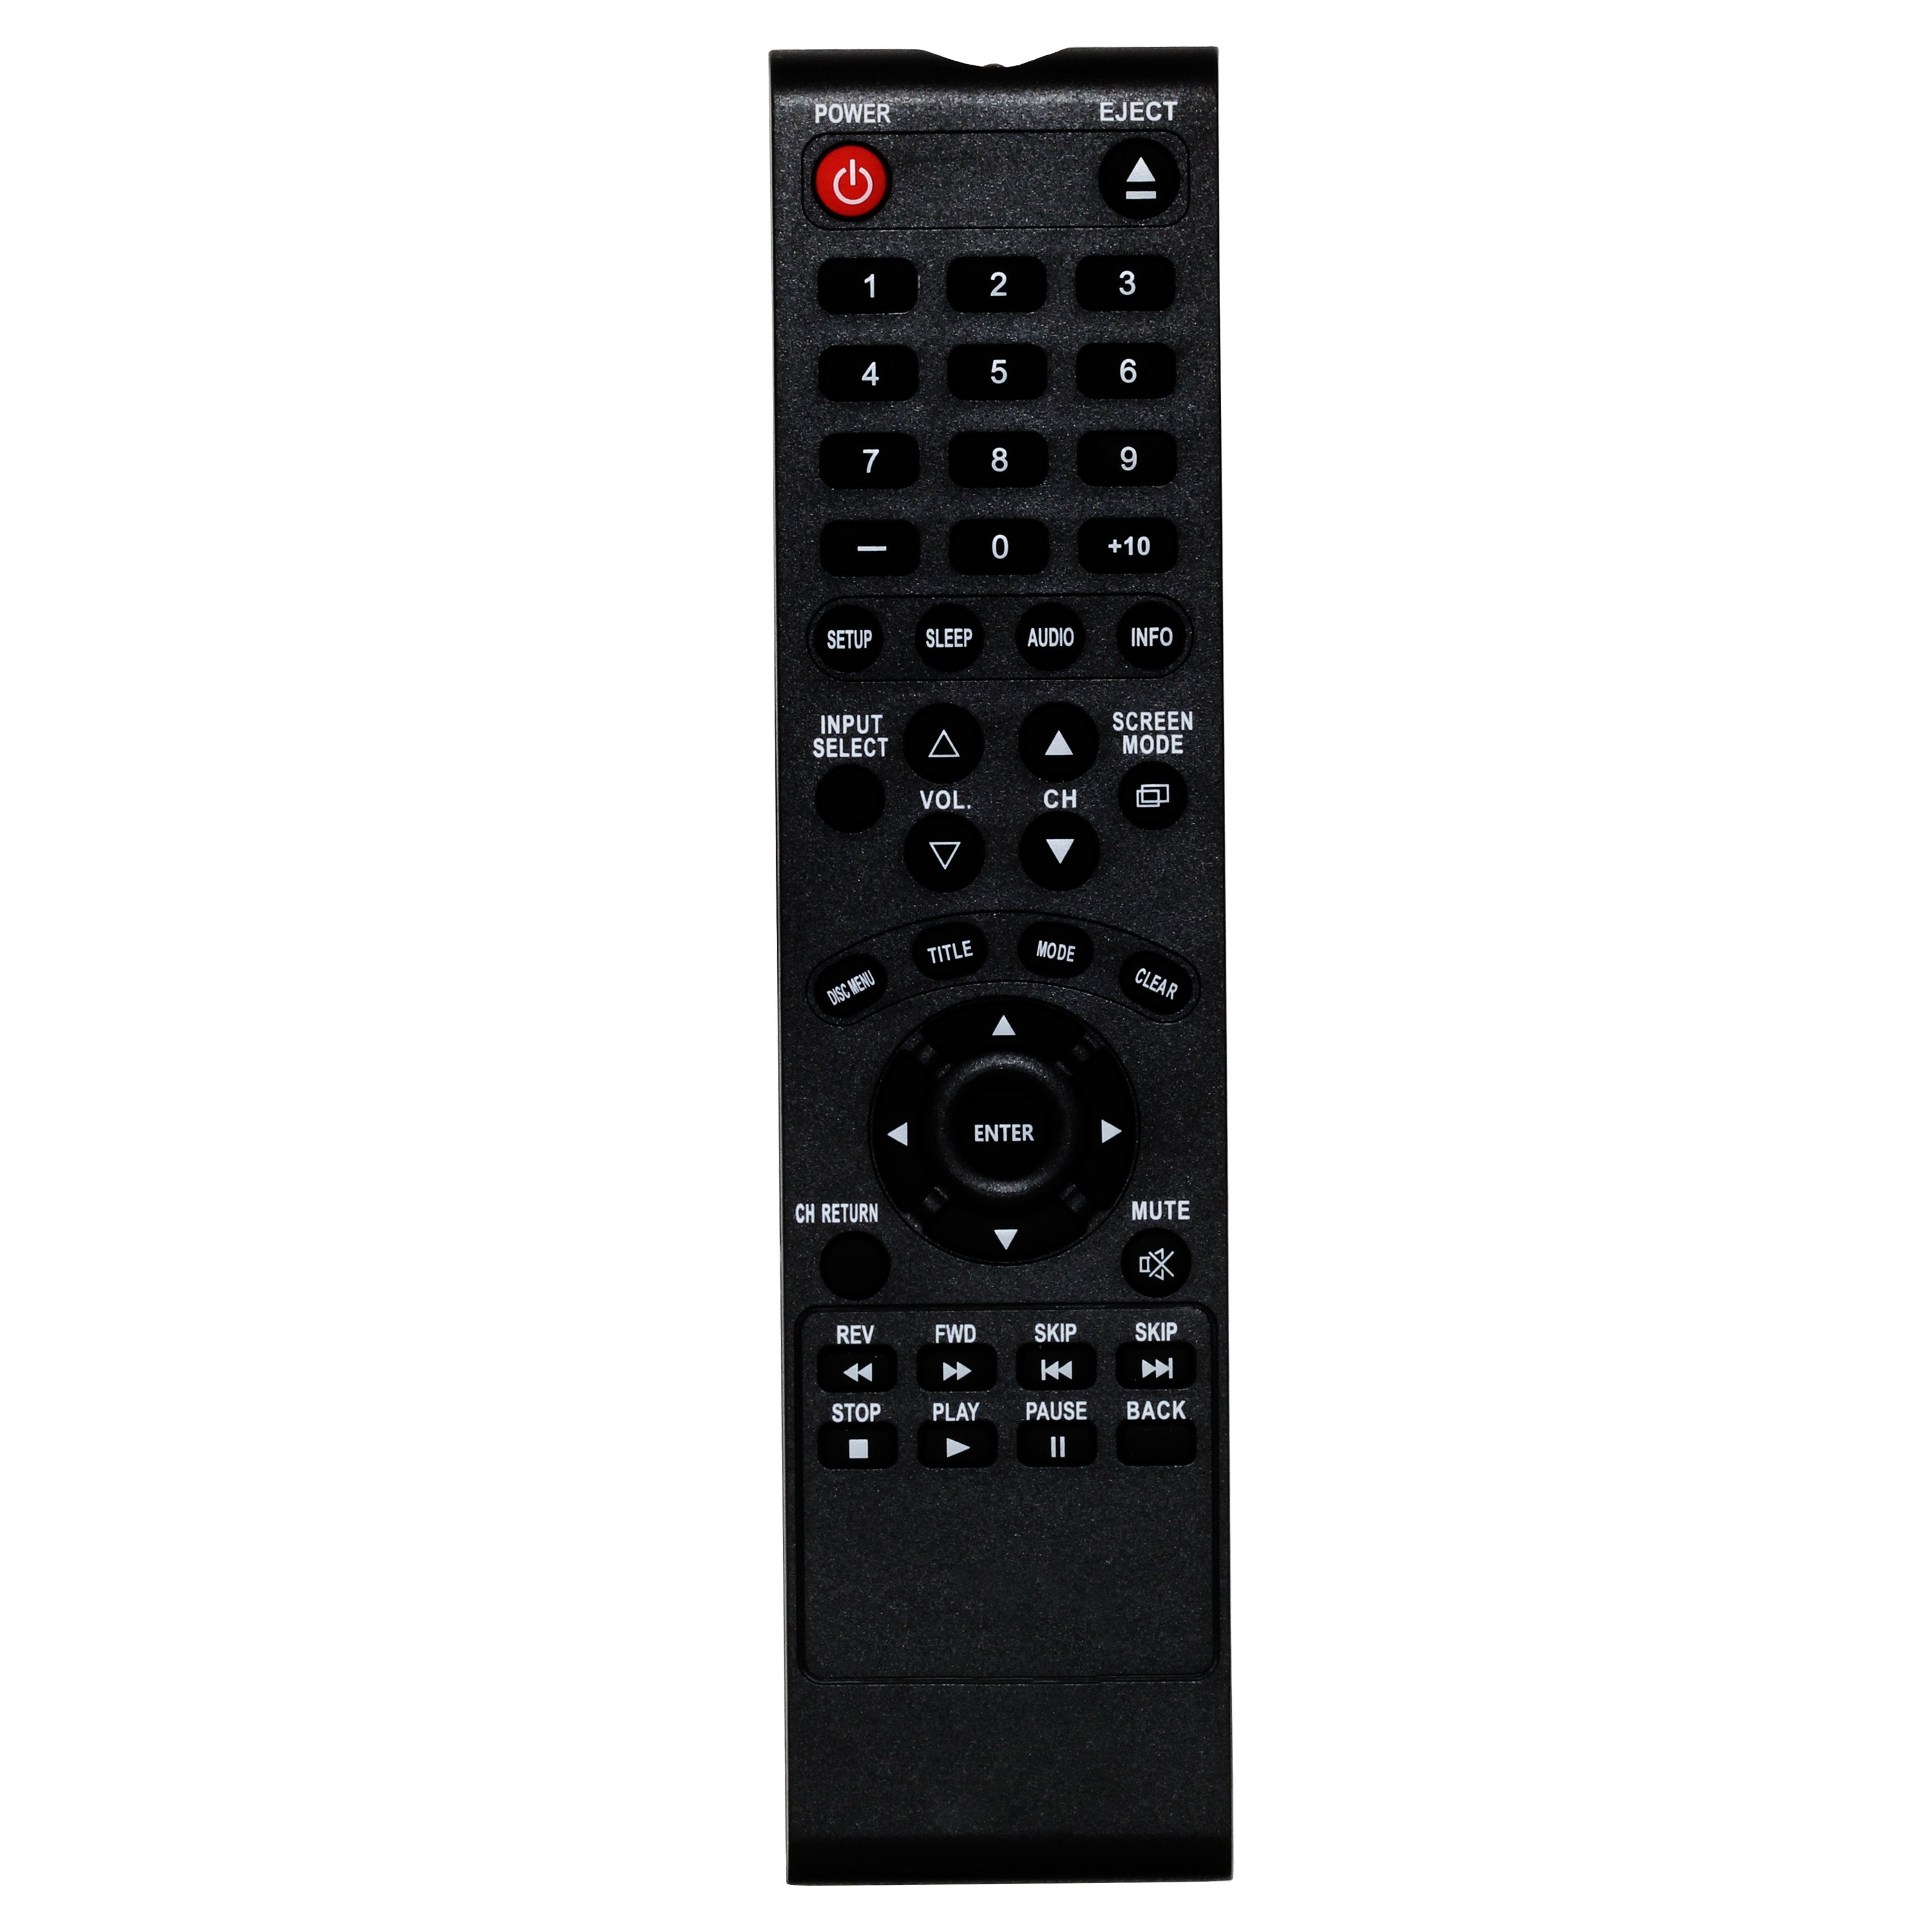 Sylvania SSC20621  TV Remote